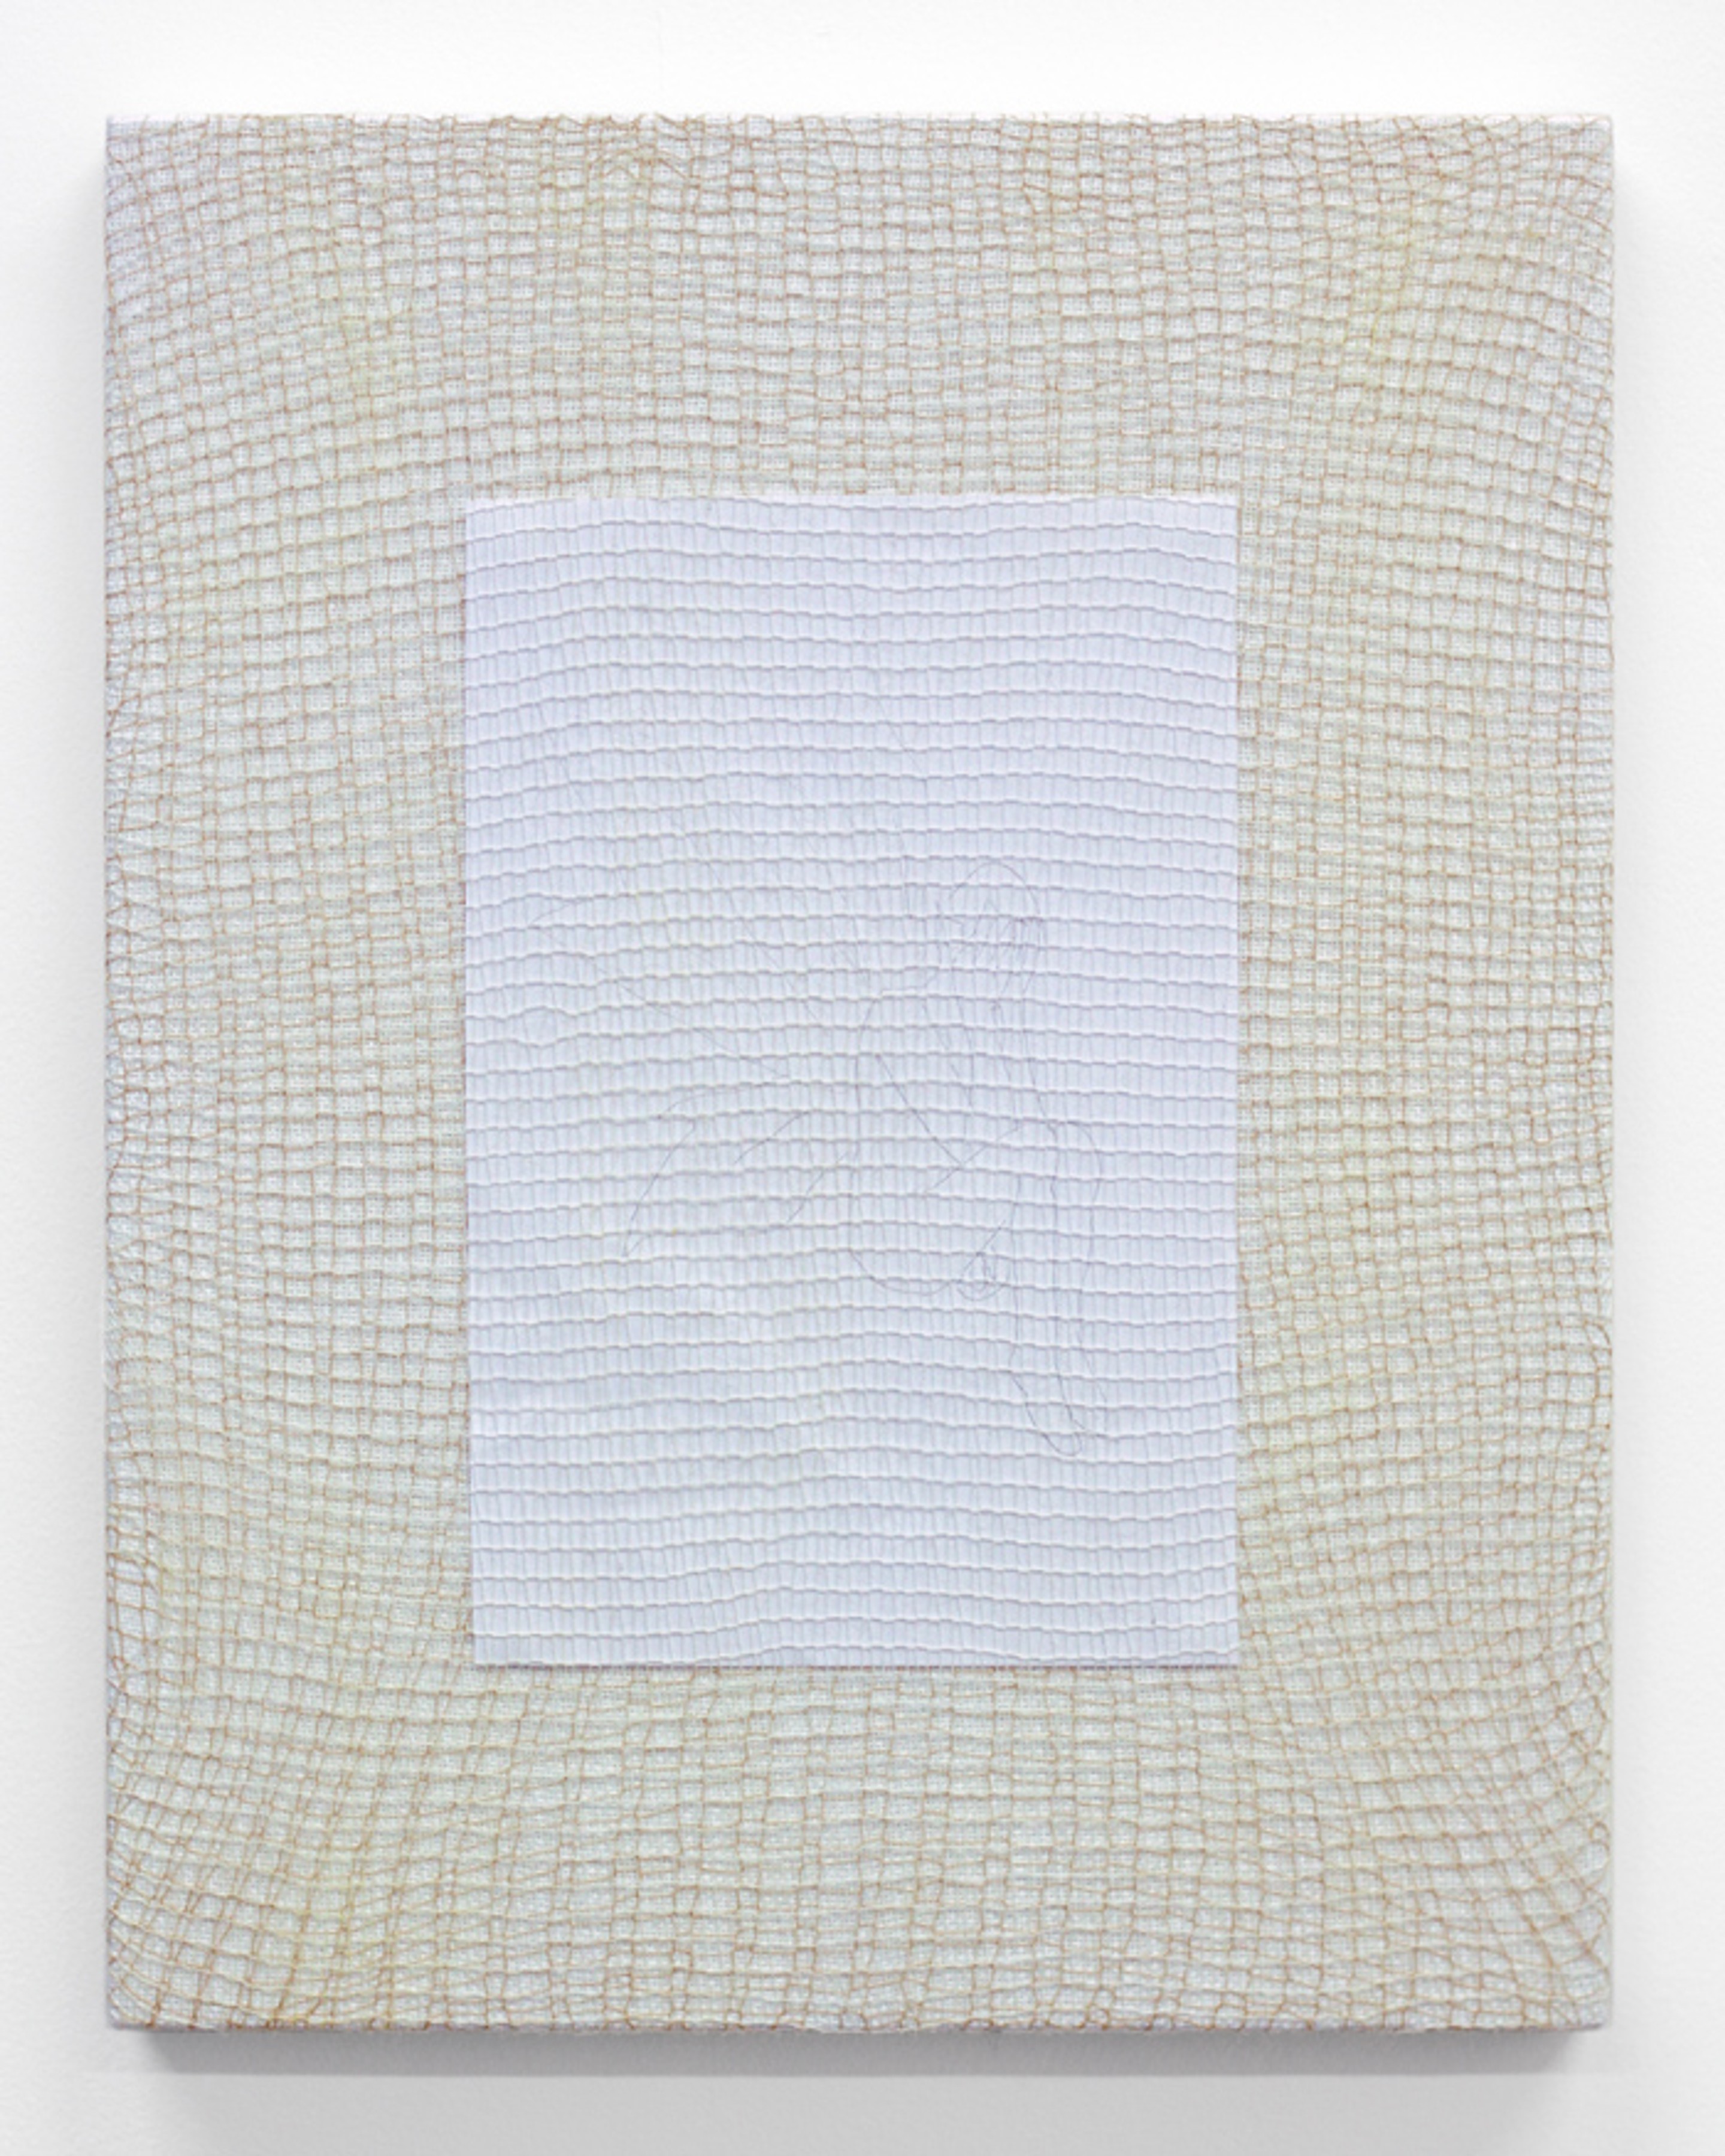 Luis Miguel Bendaña, Male Faerie (2015). Custom machine-knit cotton, pencil on paper, linen on panel